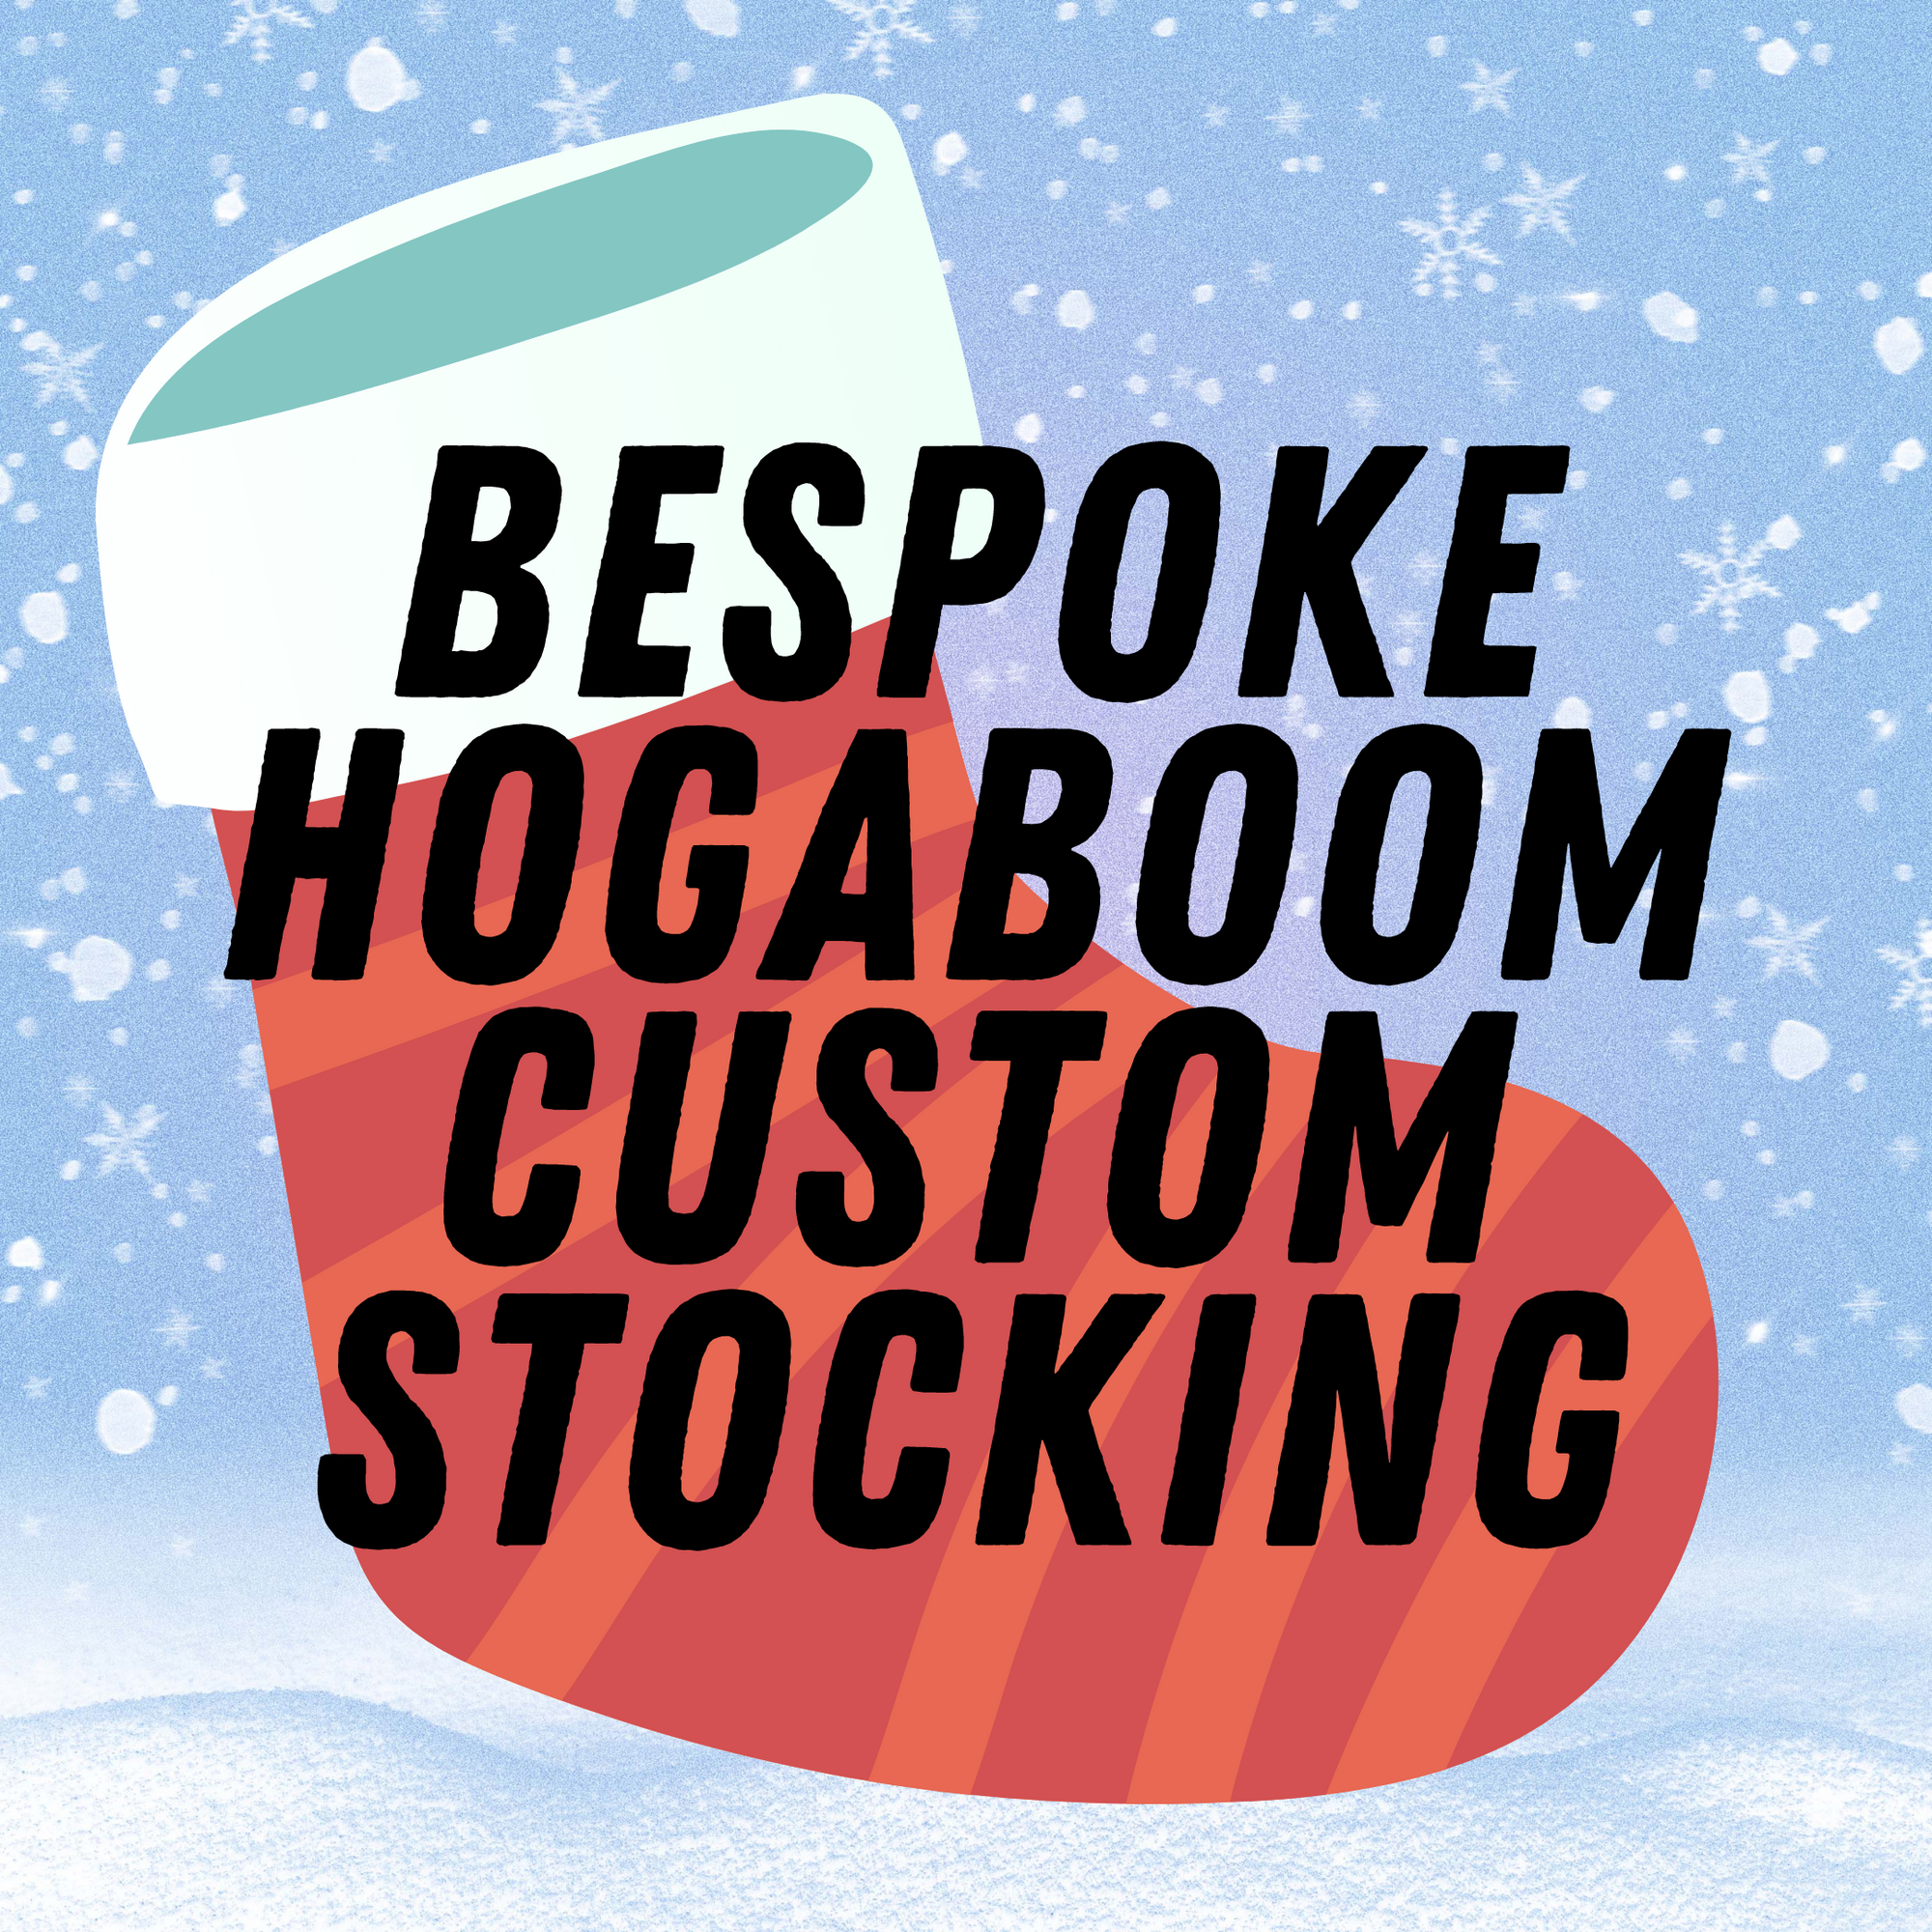 Bespoke Hogaboom CUSTOM Stocking